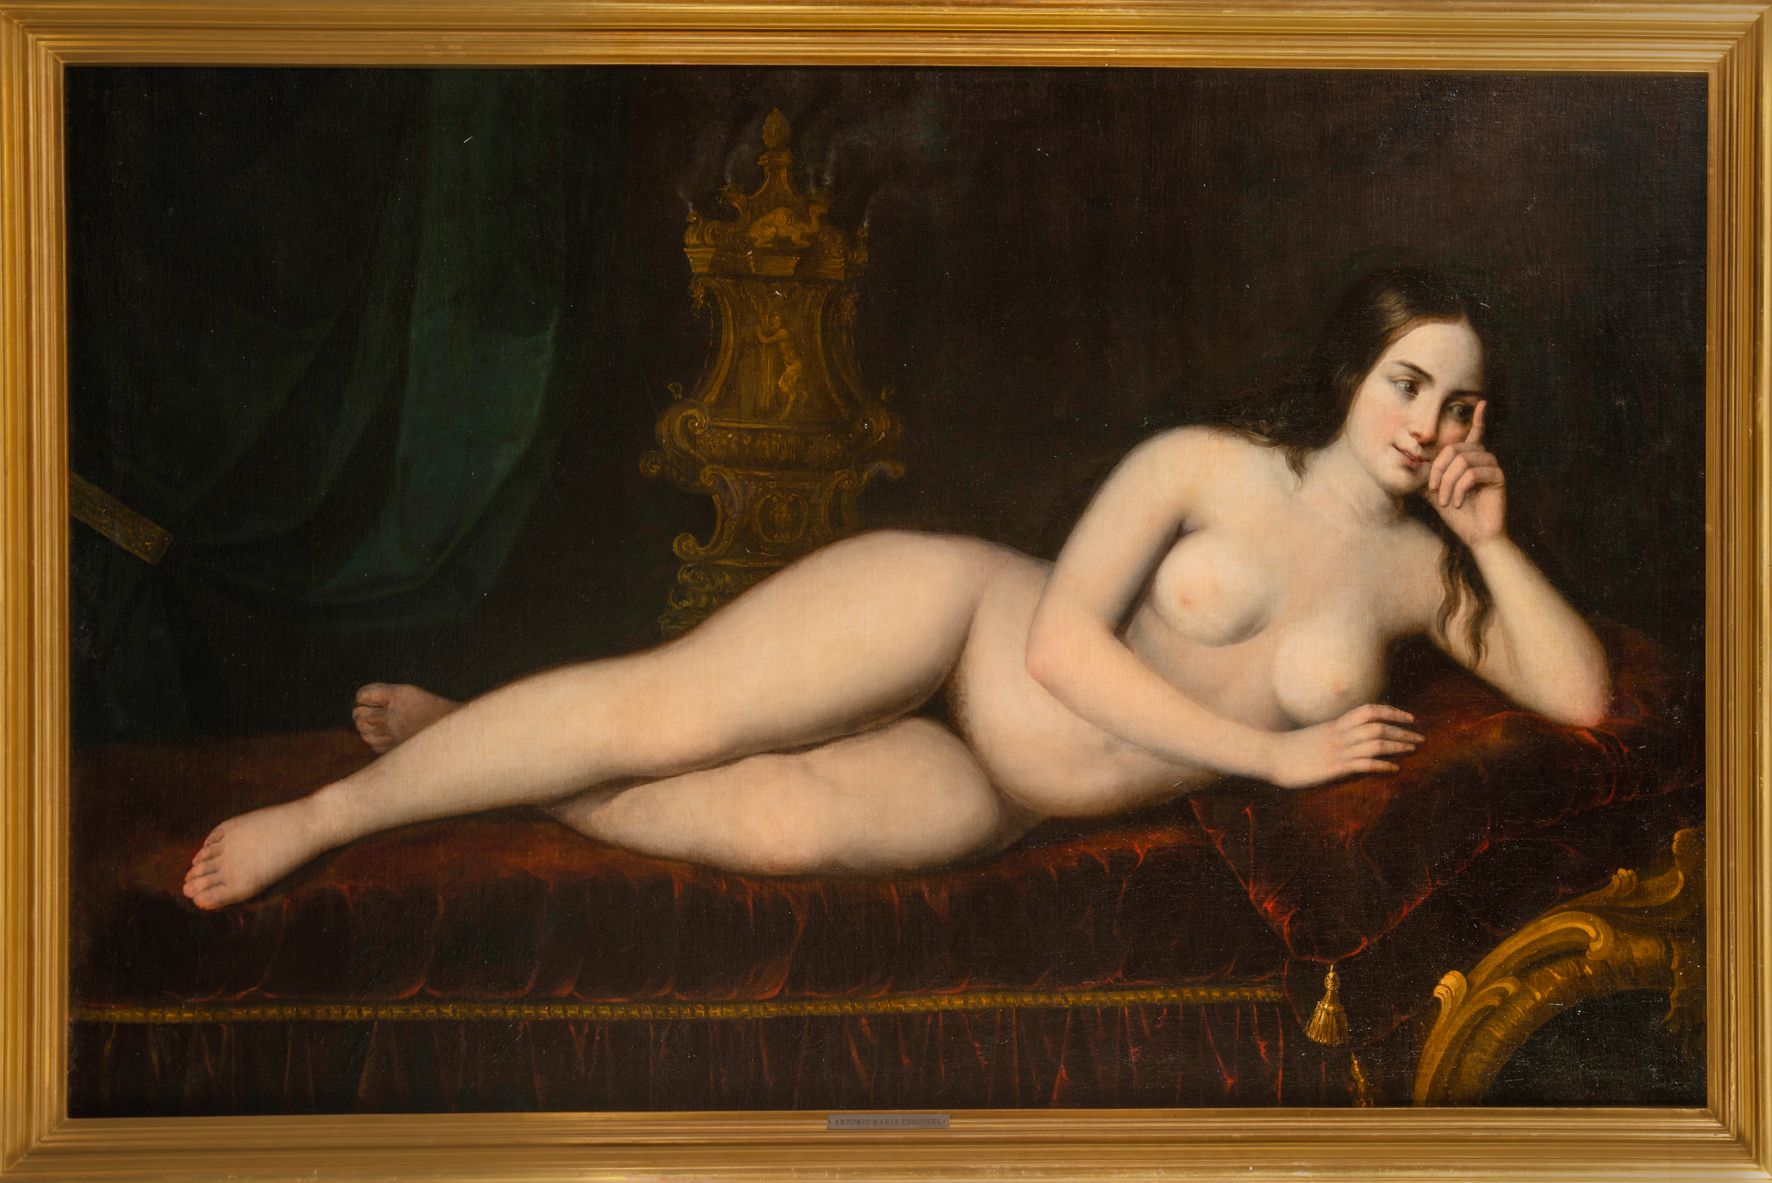 Antonio María Esquivel, Maja desnuda, c. 1840. Salida: 17.000 euros. Remate: 25.000 euros